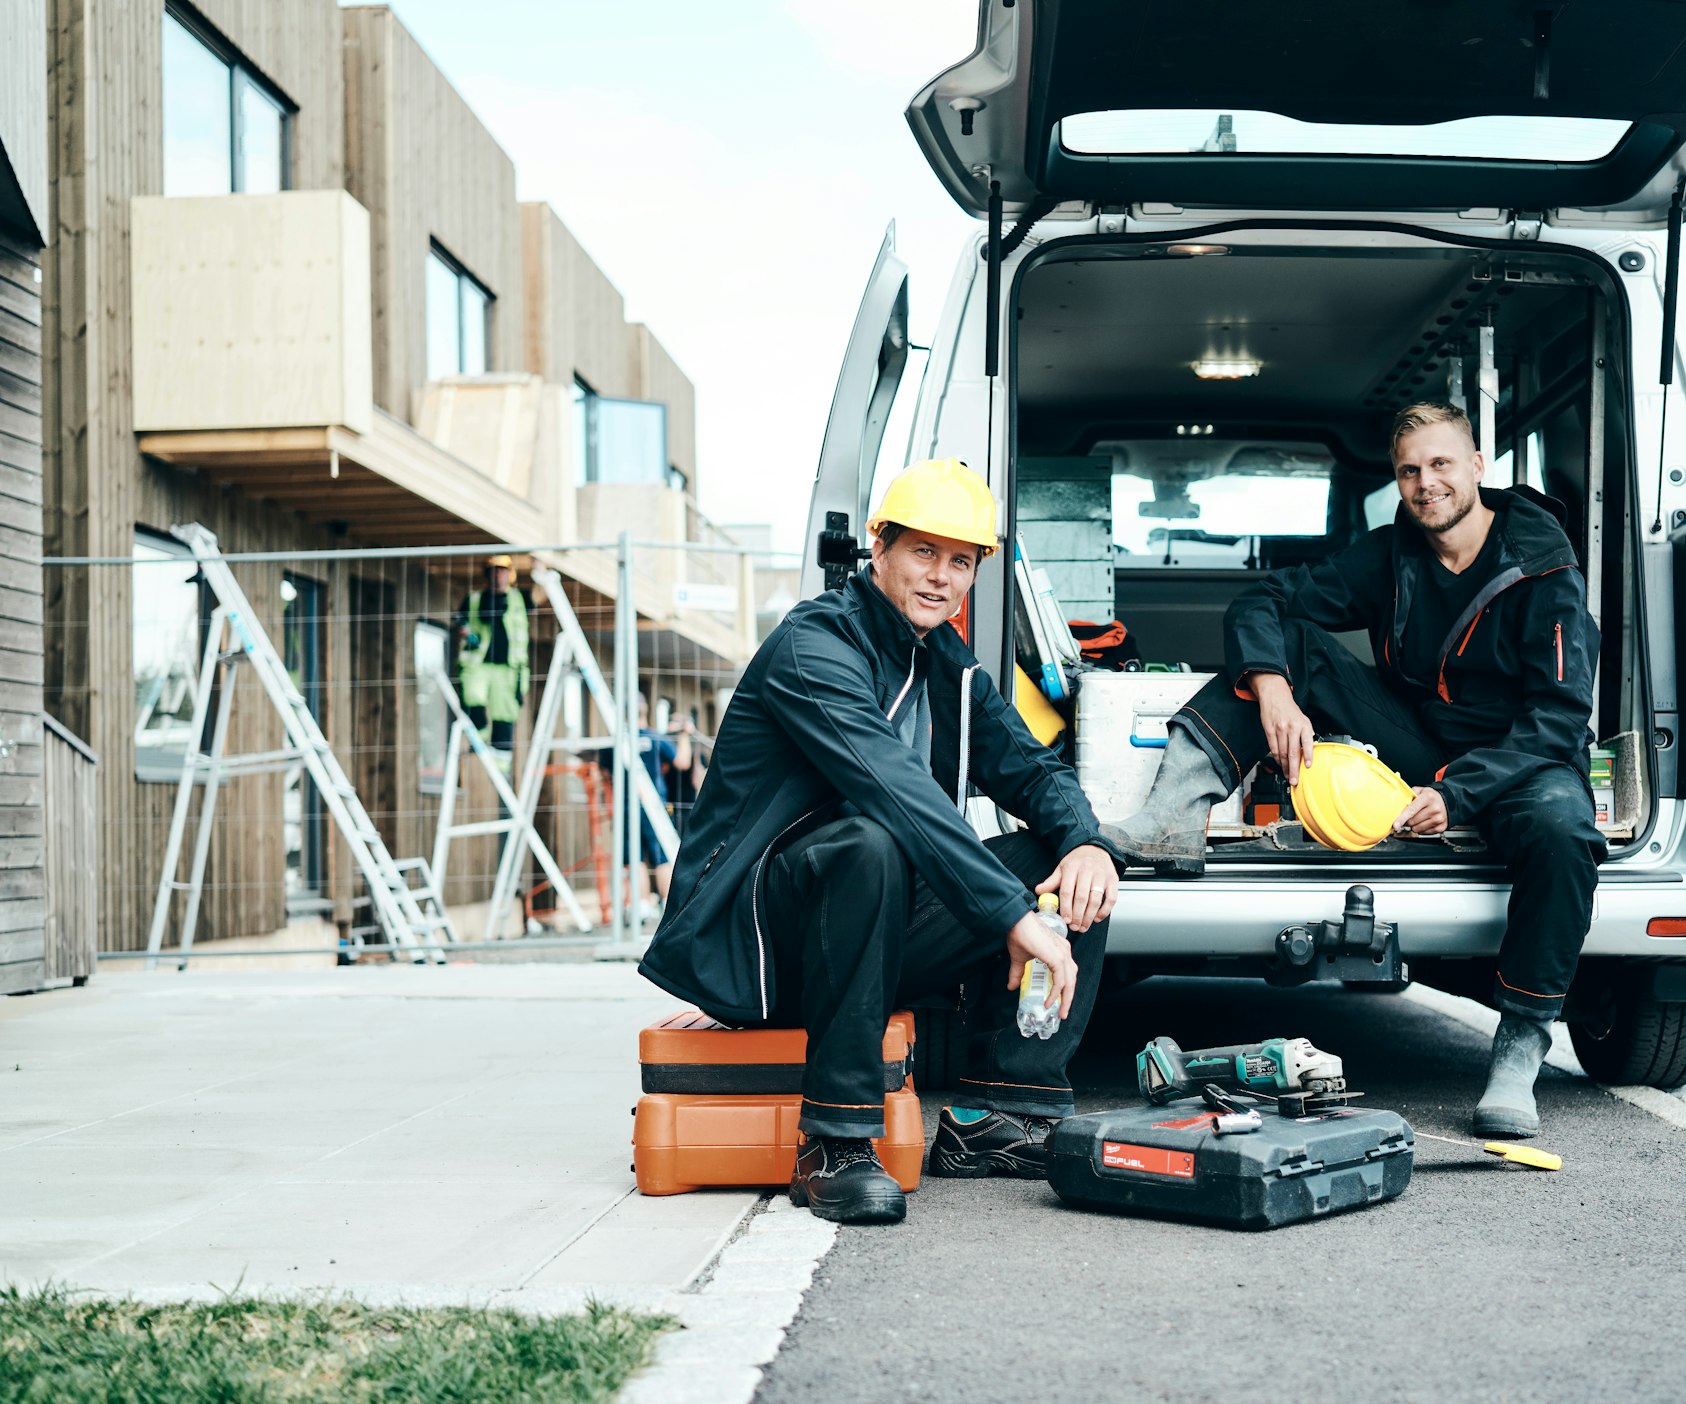 Two construction workers on break, sat behind van with tools on the floor